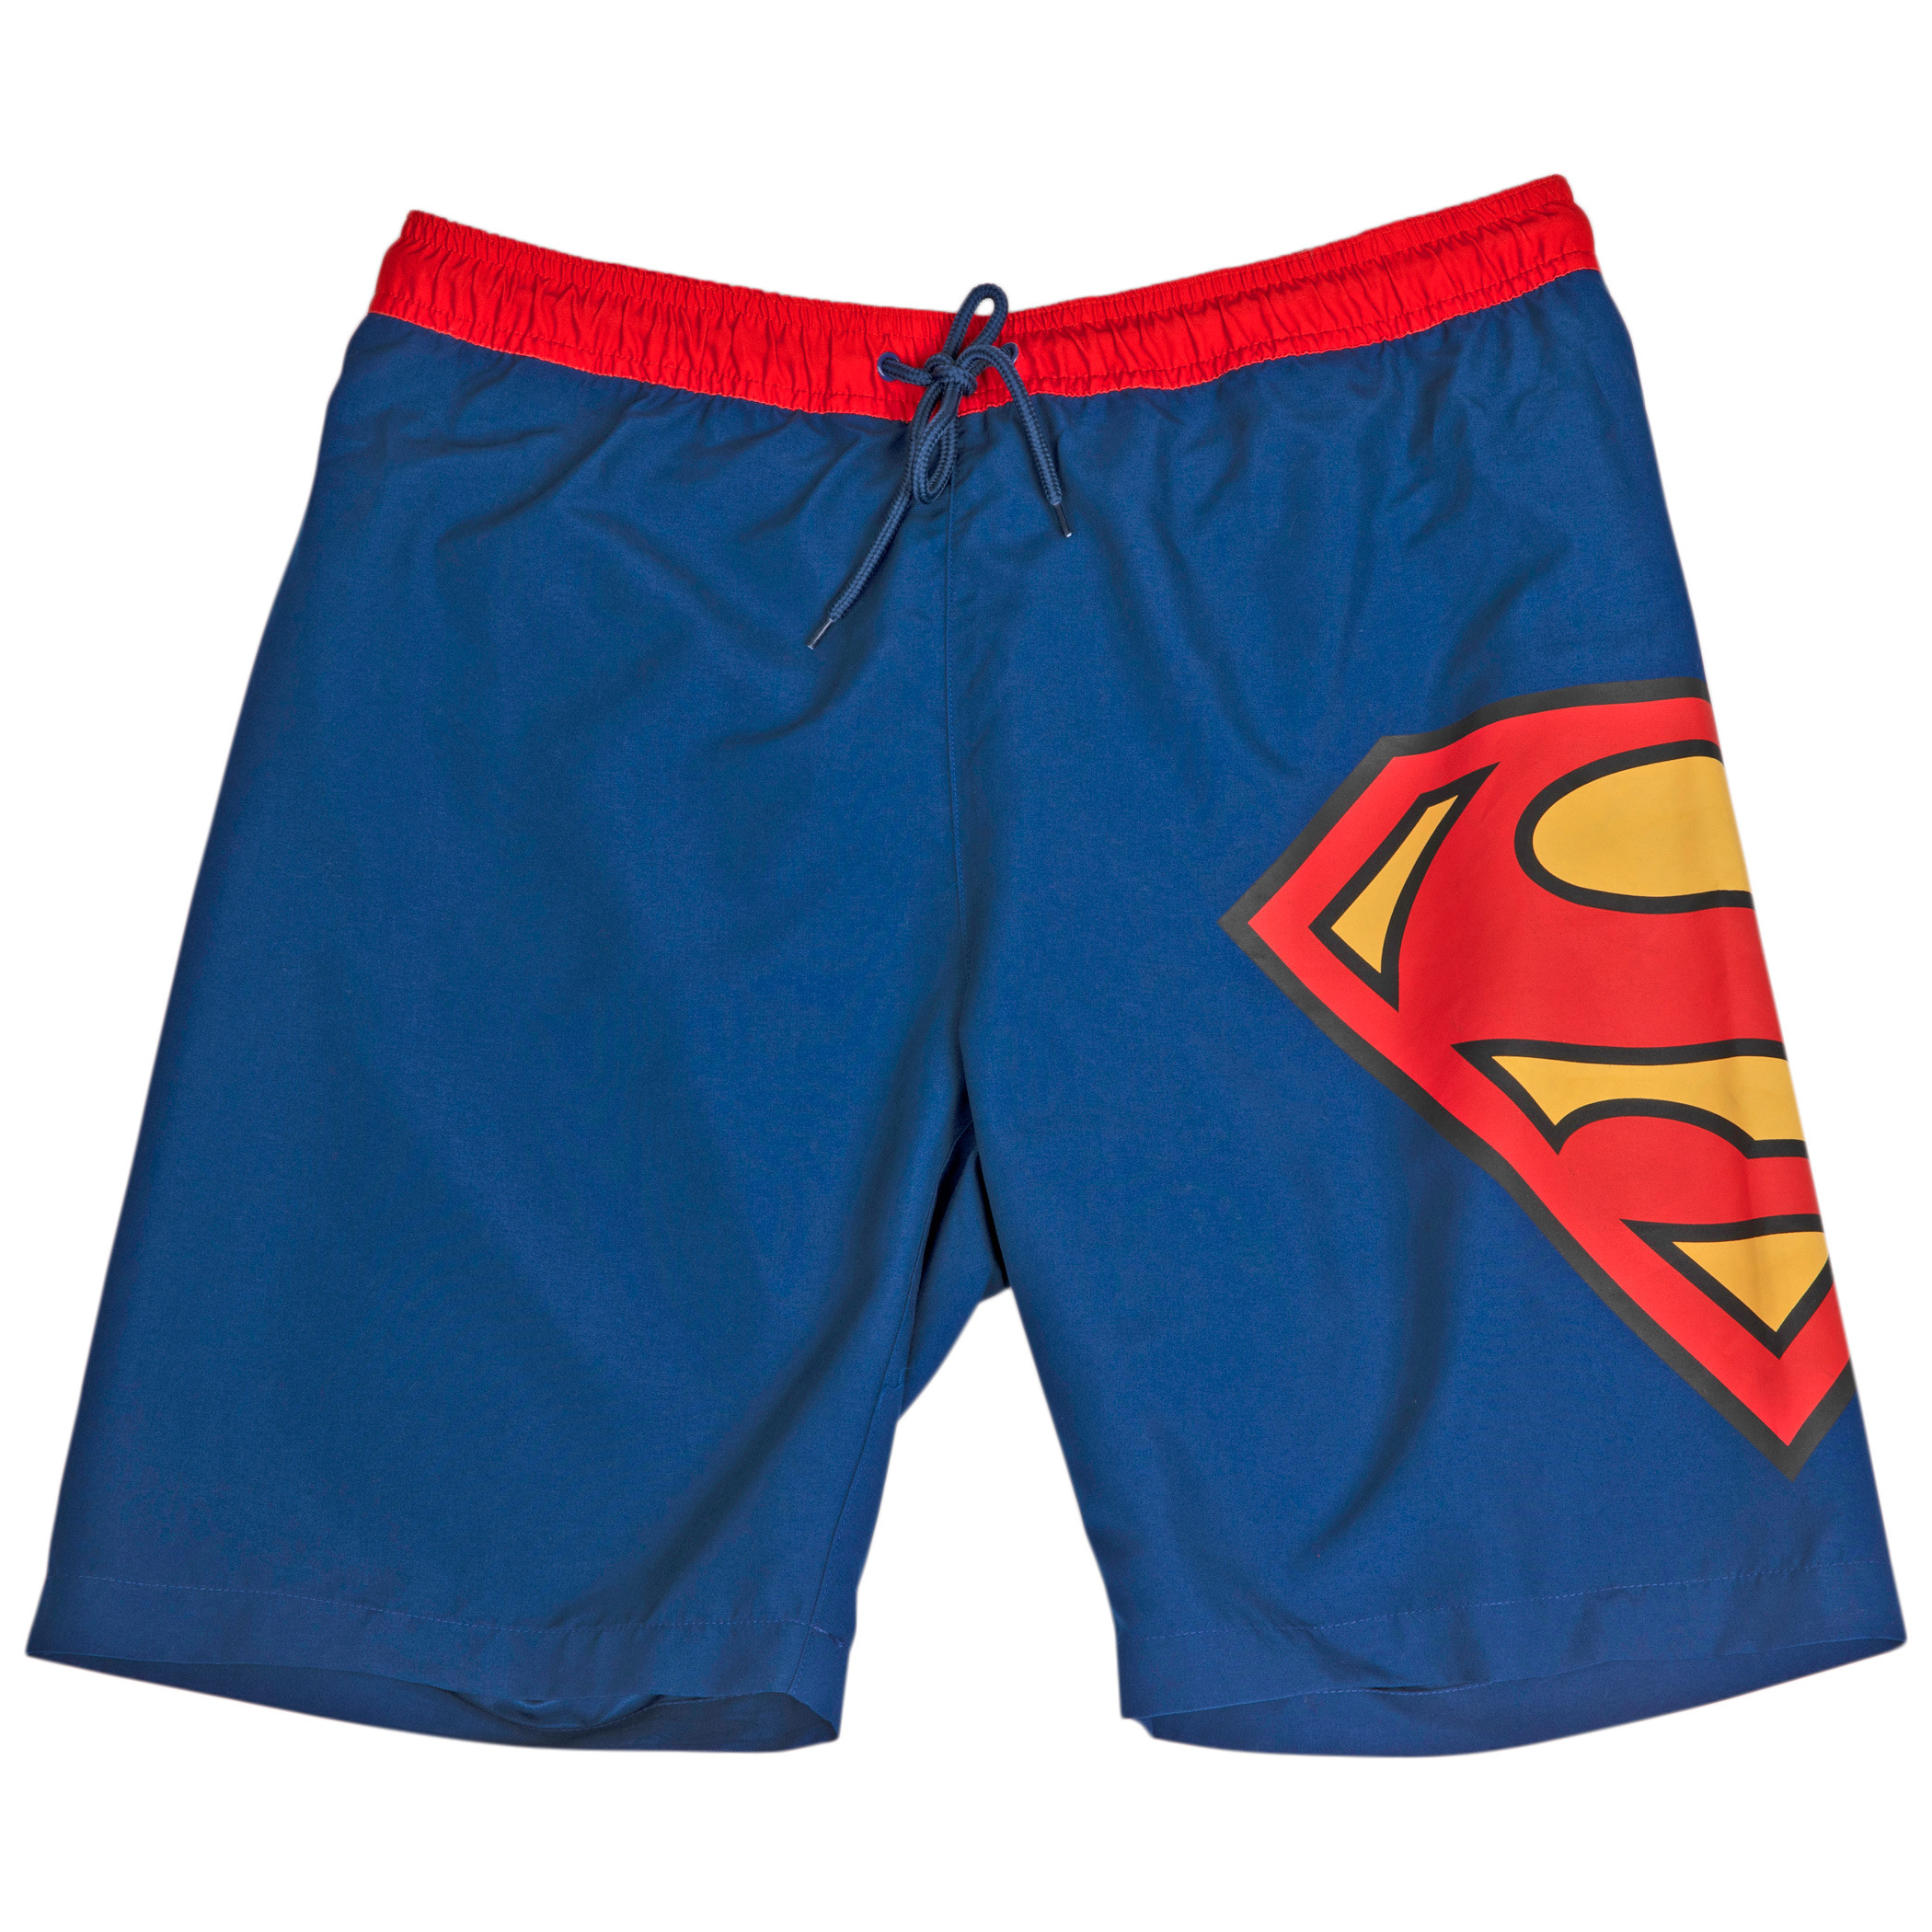 waterstof Nu al leeuwerik Superman Symbol Blue with Red Waistband Board Shorts Blue | eBay